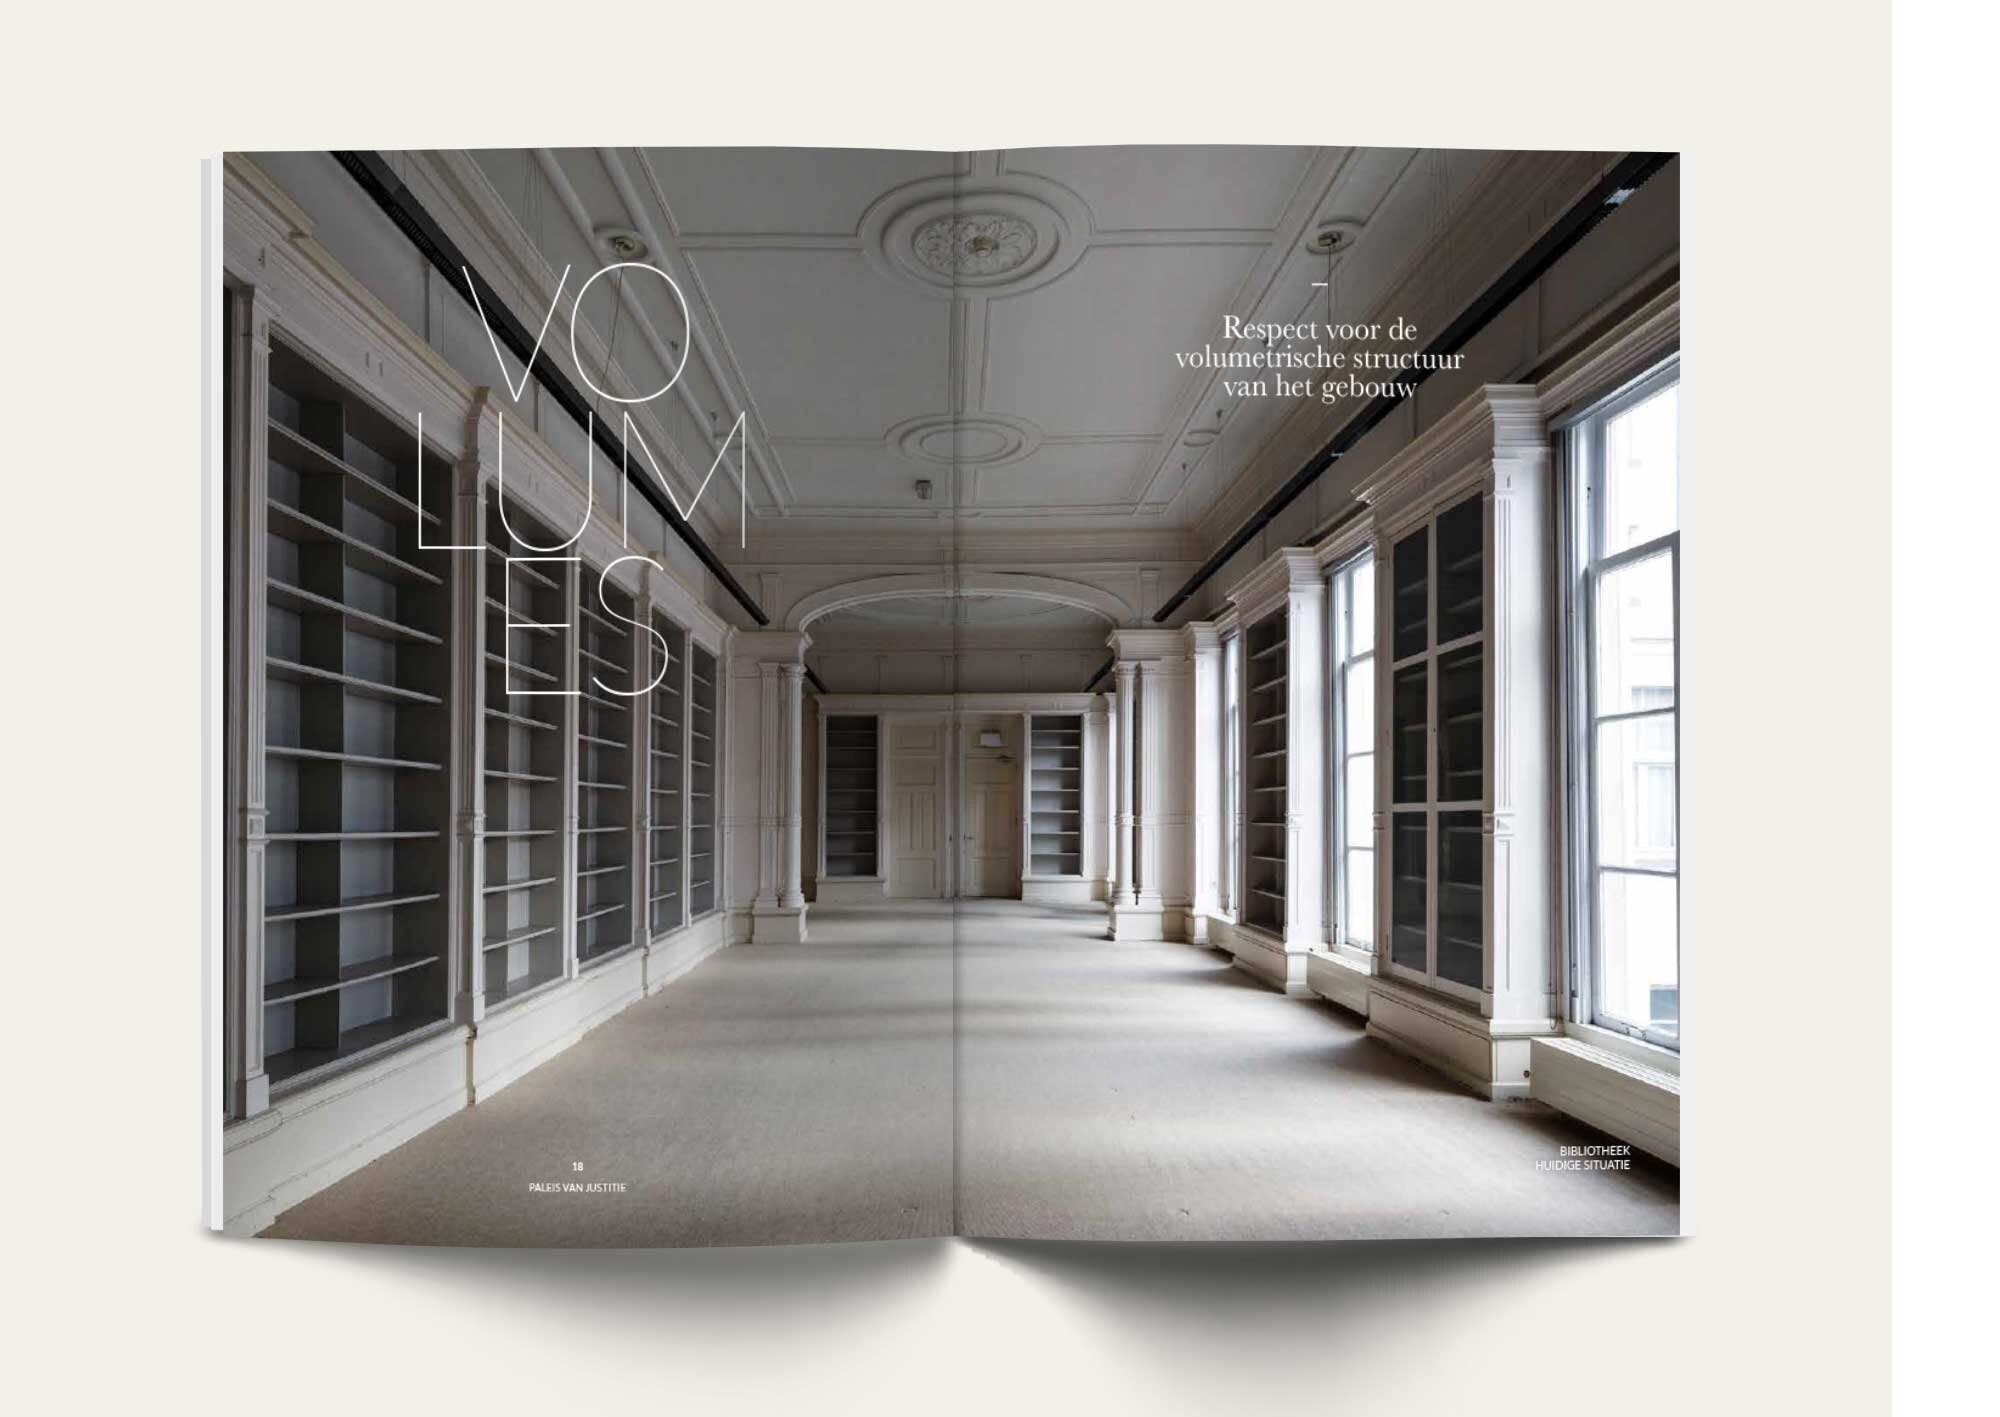 Kazeze-graphic-design-amsterdam-ehpc-office-winhov-prijsvraag-palais-de-jardin-05.jpg